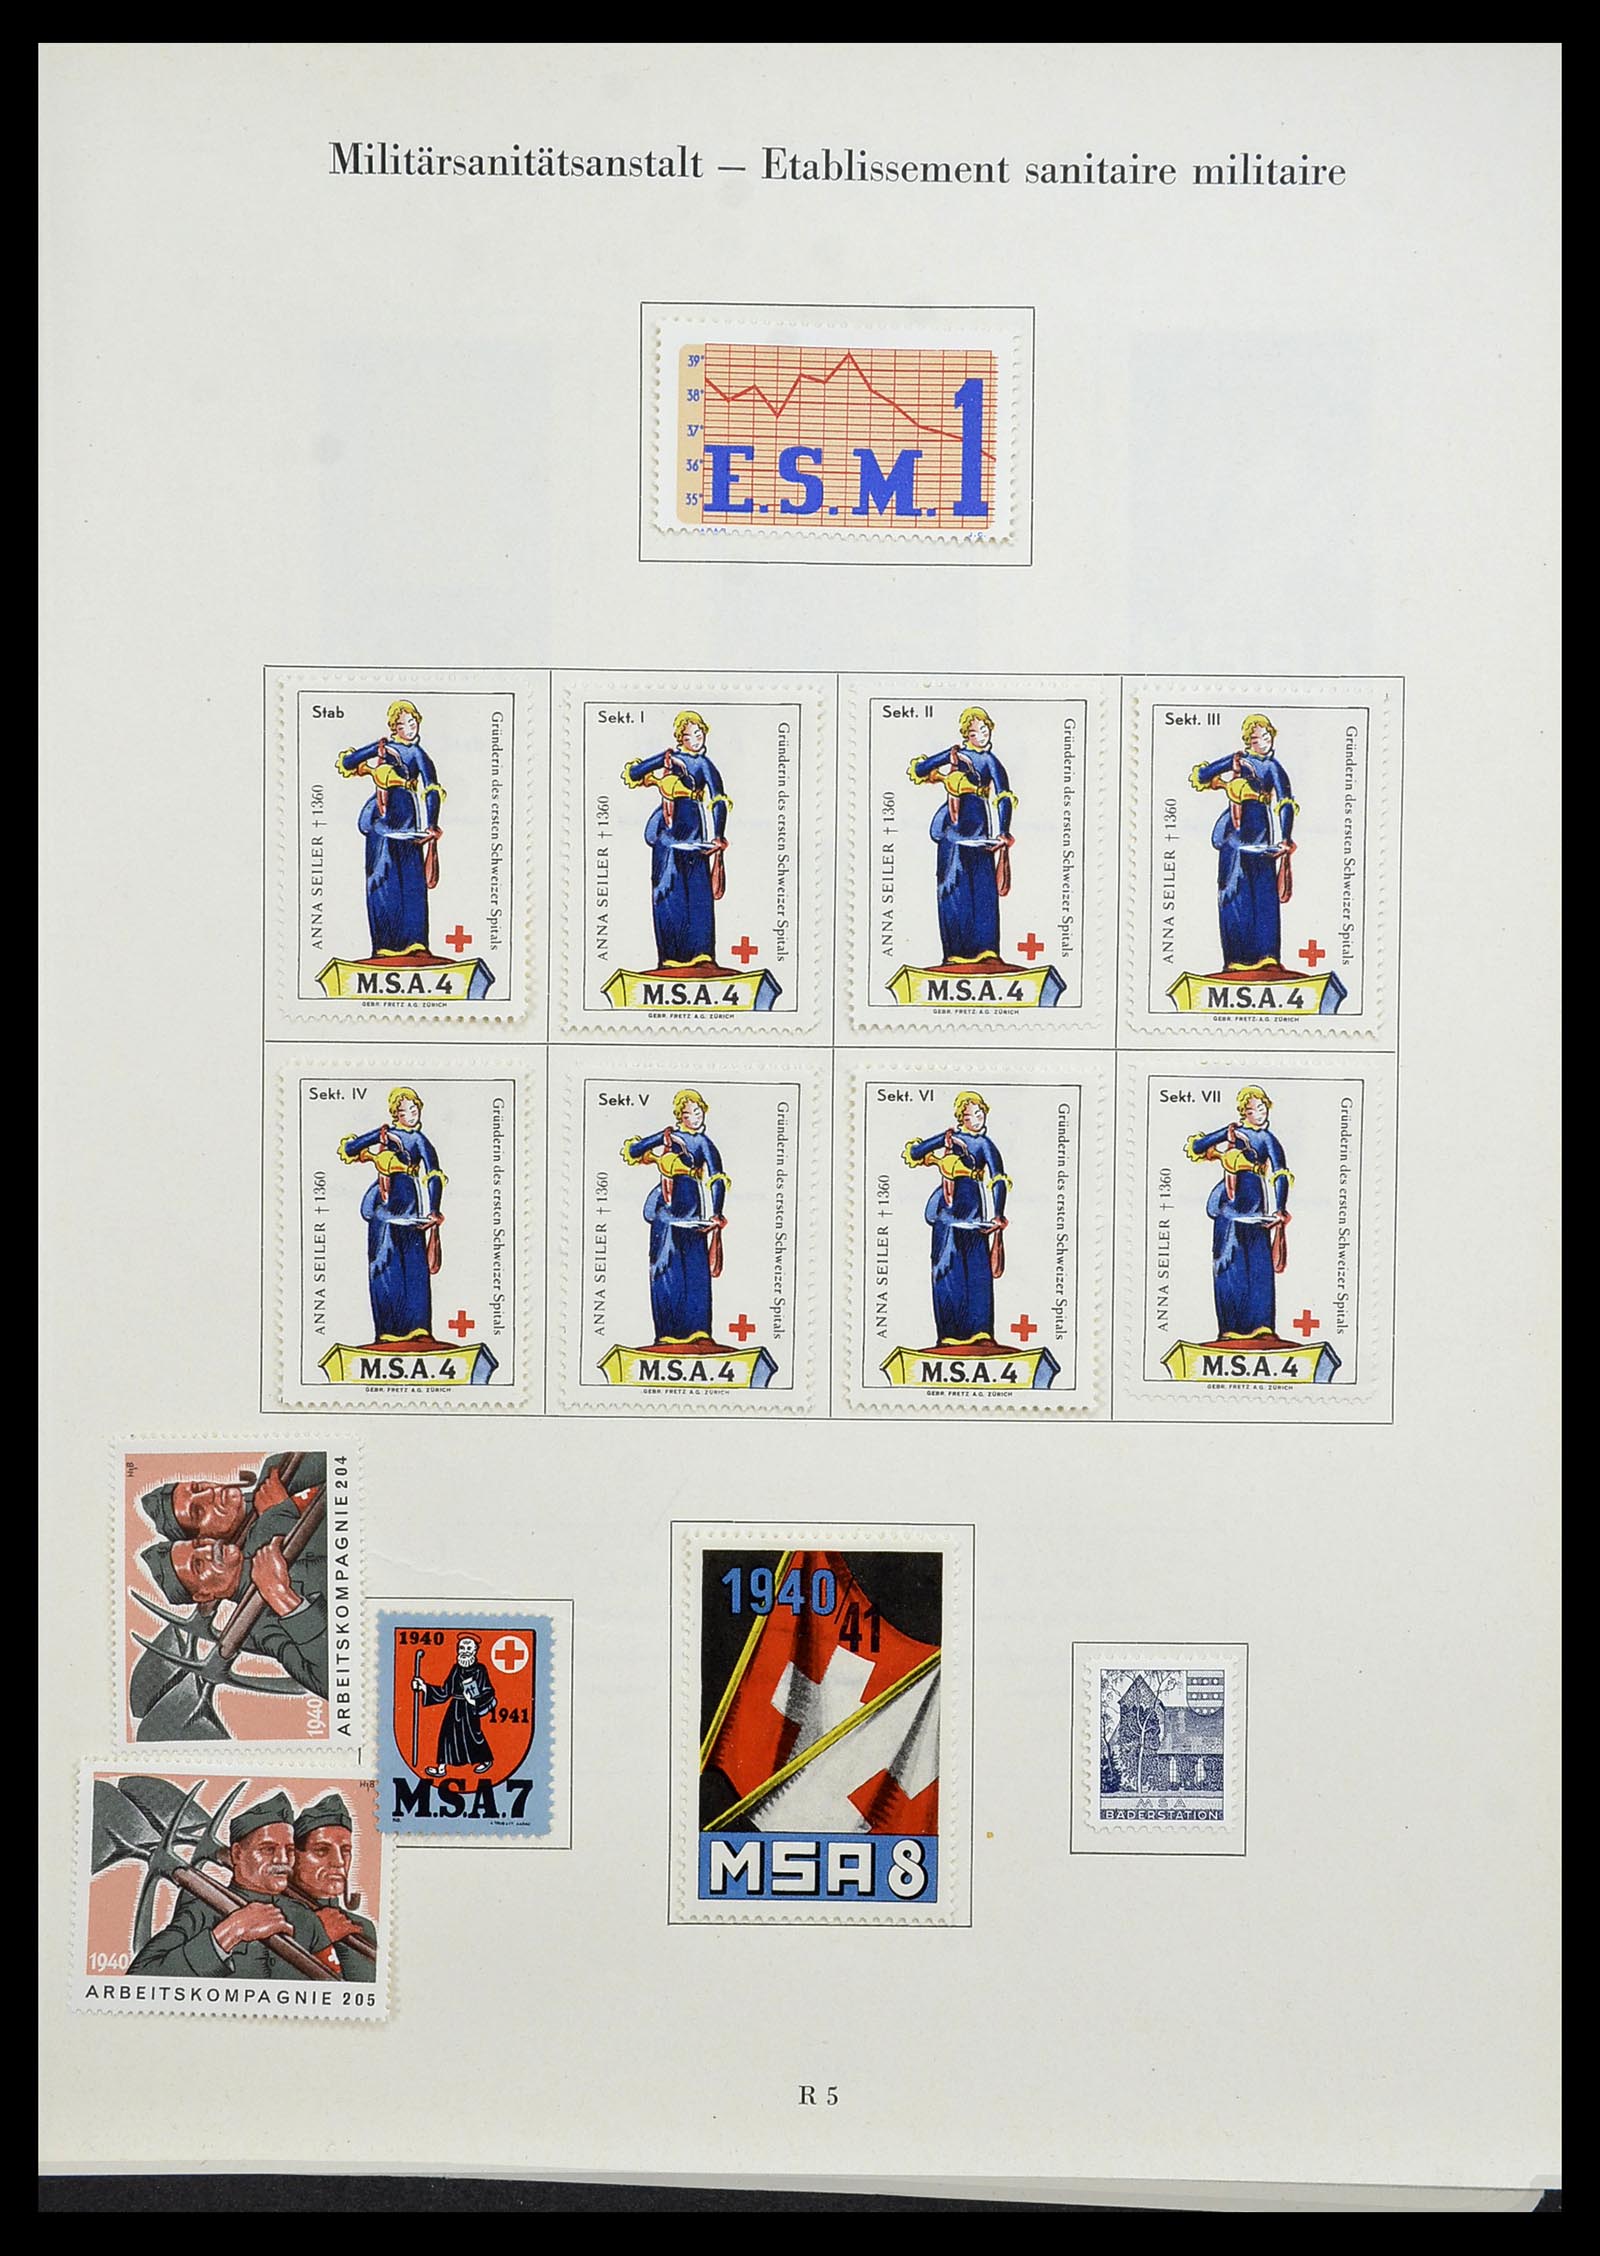 34234 301 - Stamp collection 34234 Switzerland soldier stamps 1939-1945.